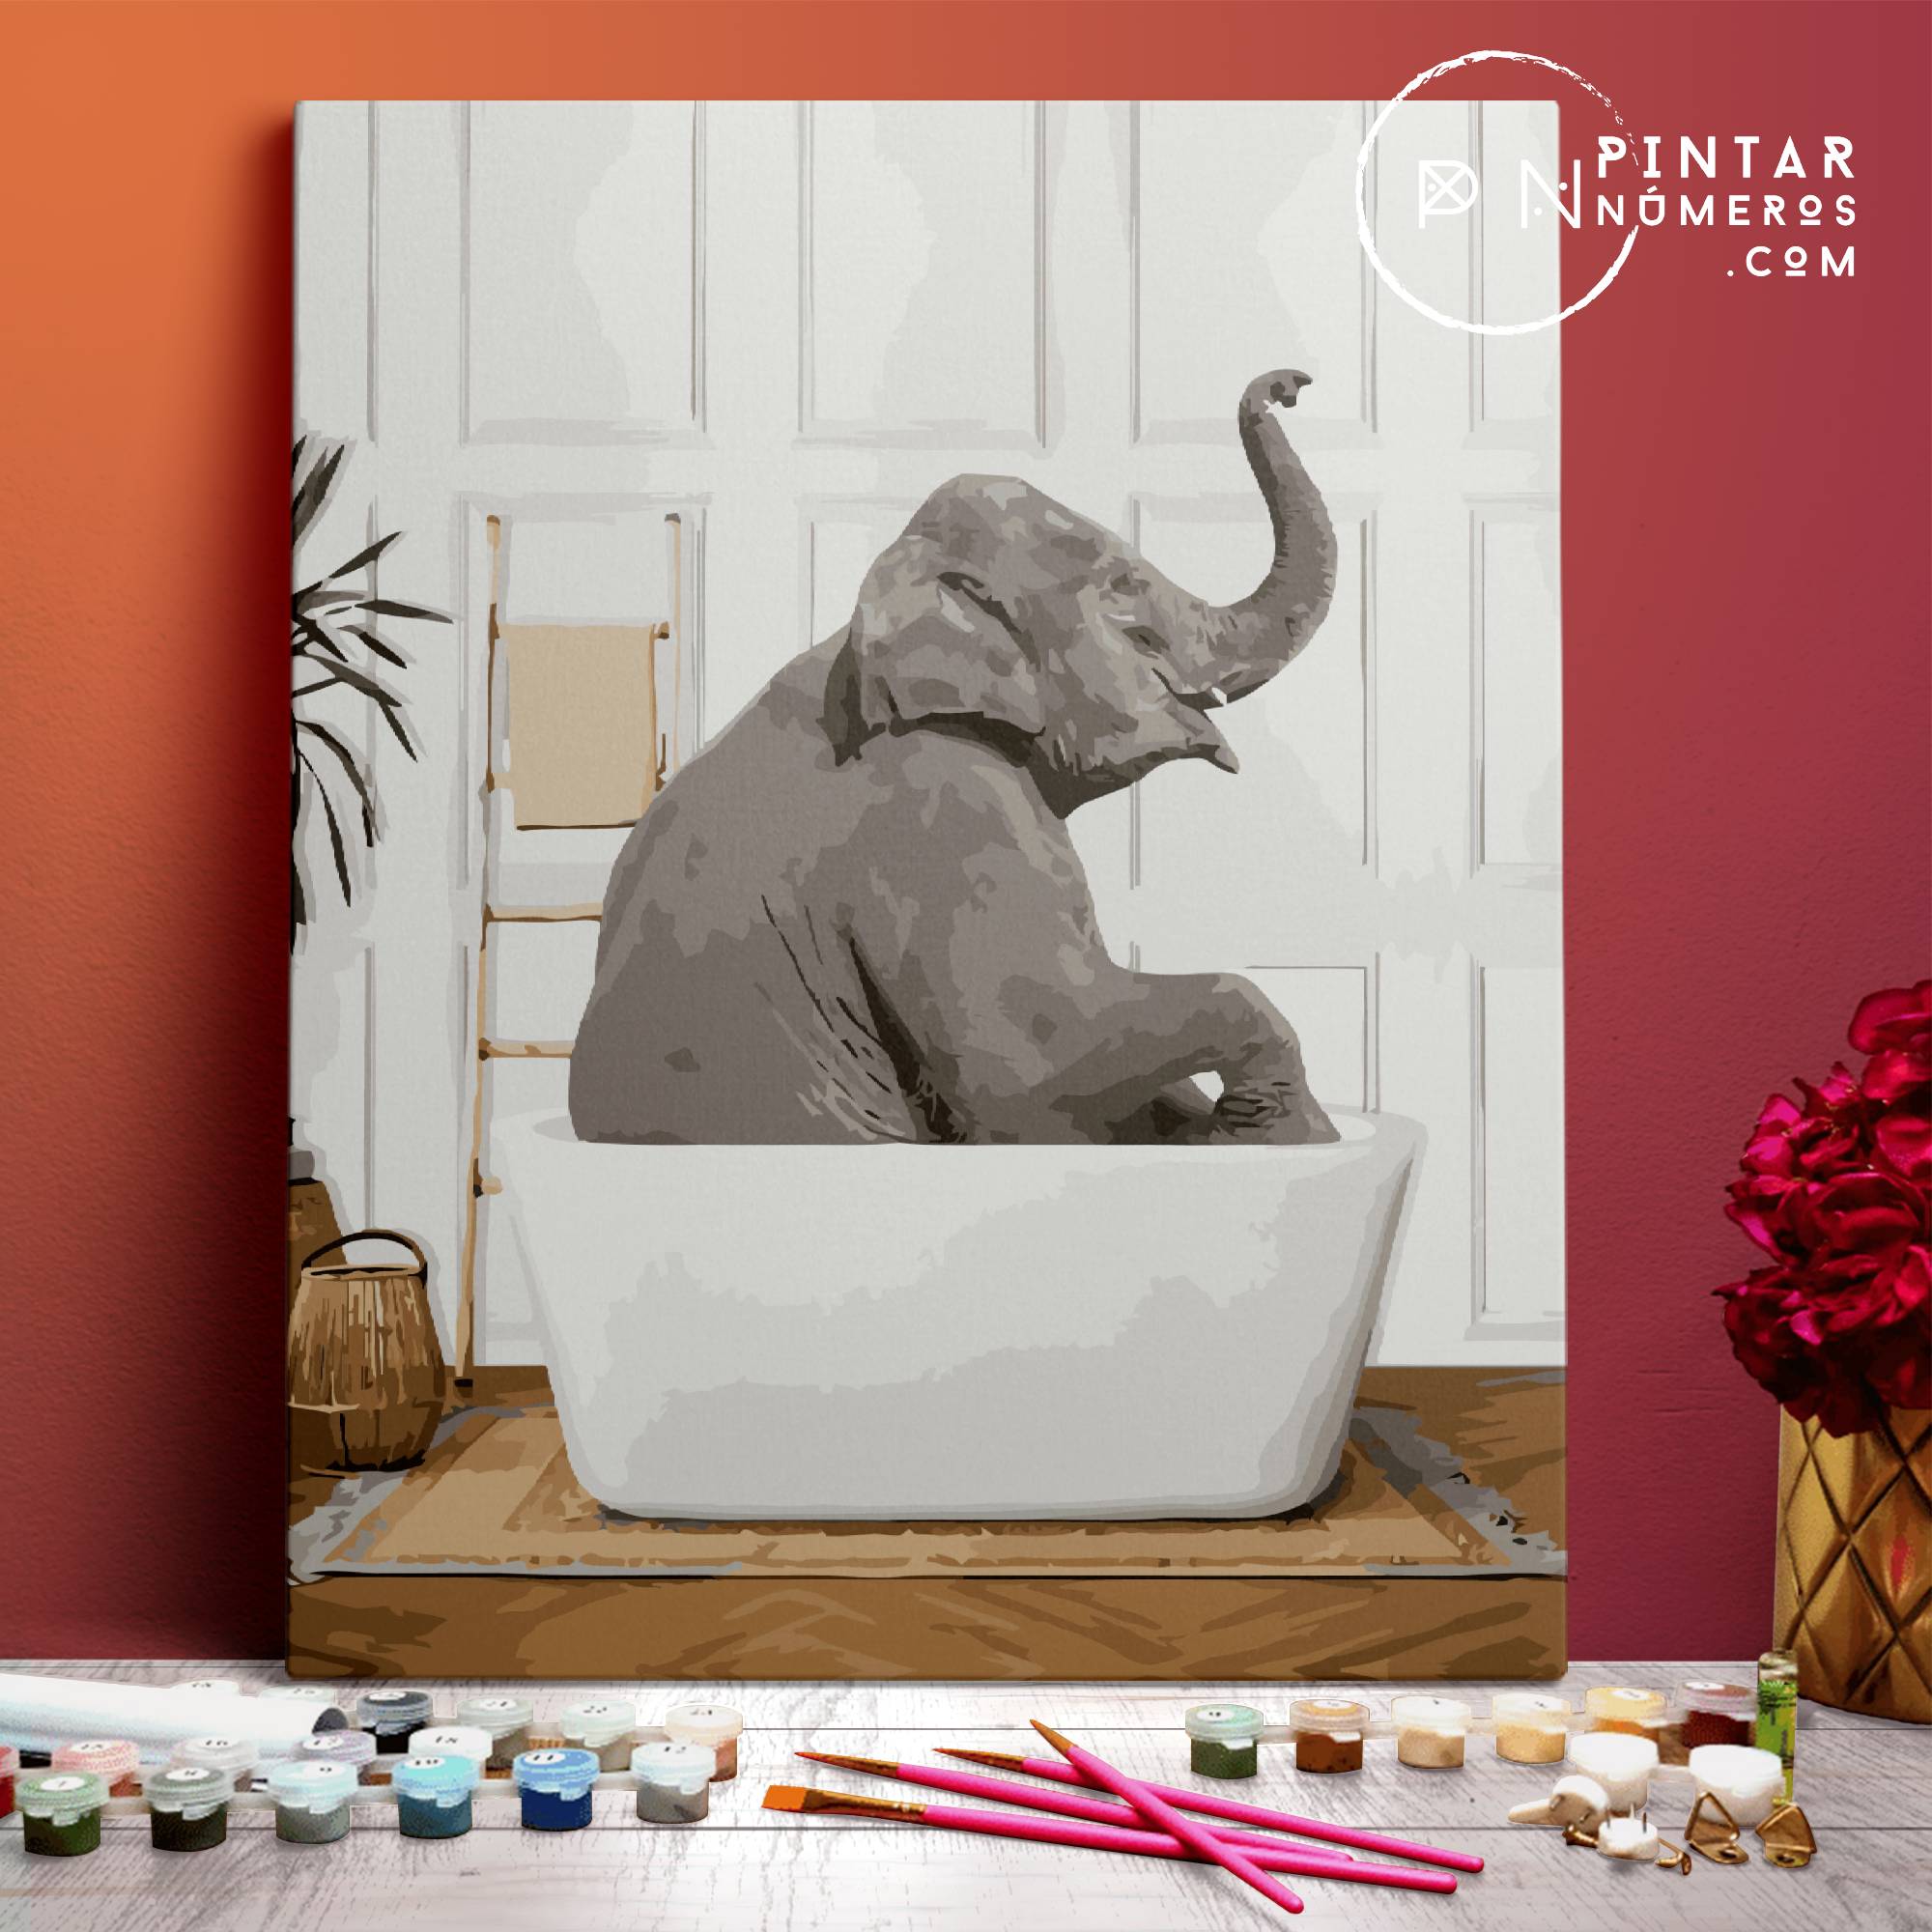 Elefant in der Badewanne – Pintar Numeros®